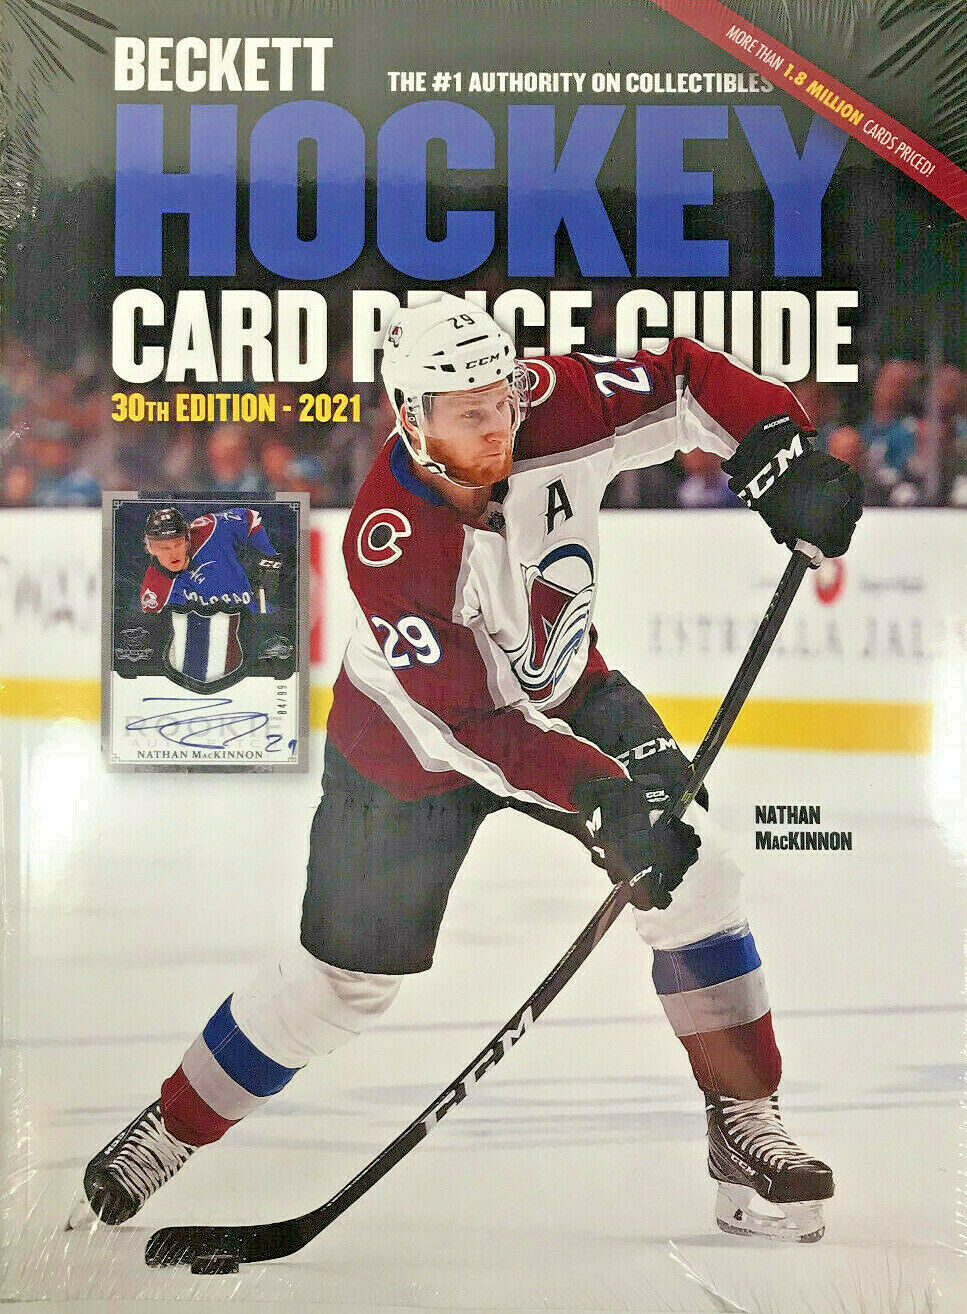 New 2021 Beckett Hockey Card Annual Price Guide 30th Edition W/ Nathan Mackinnon